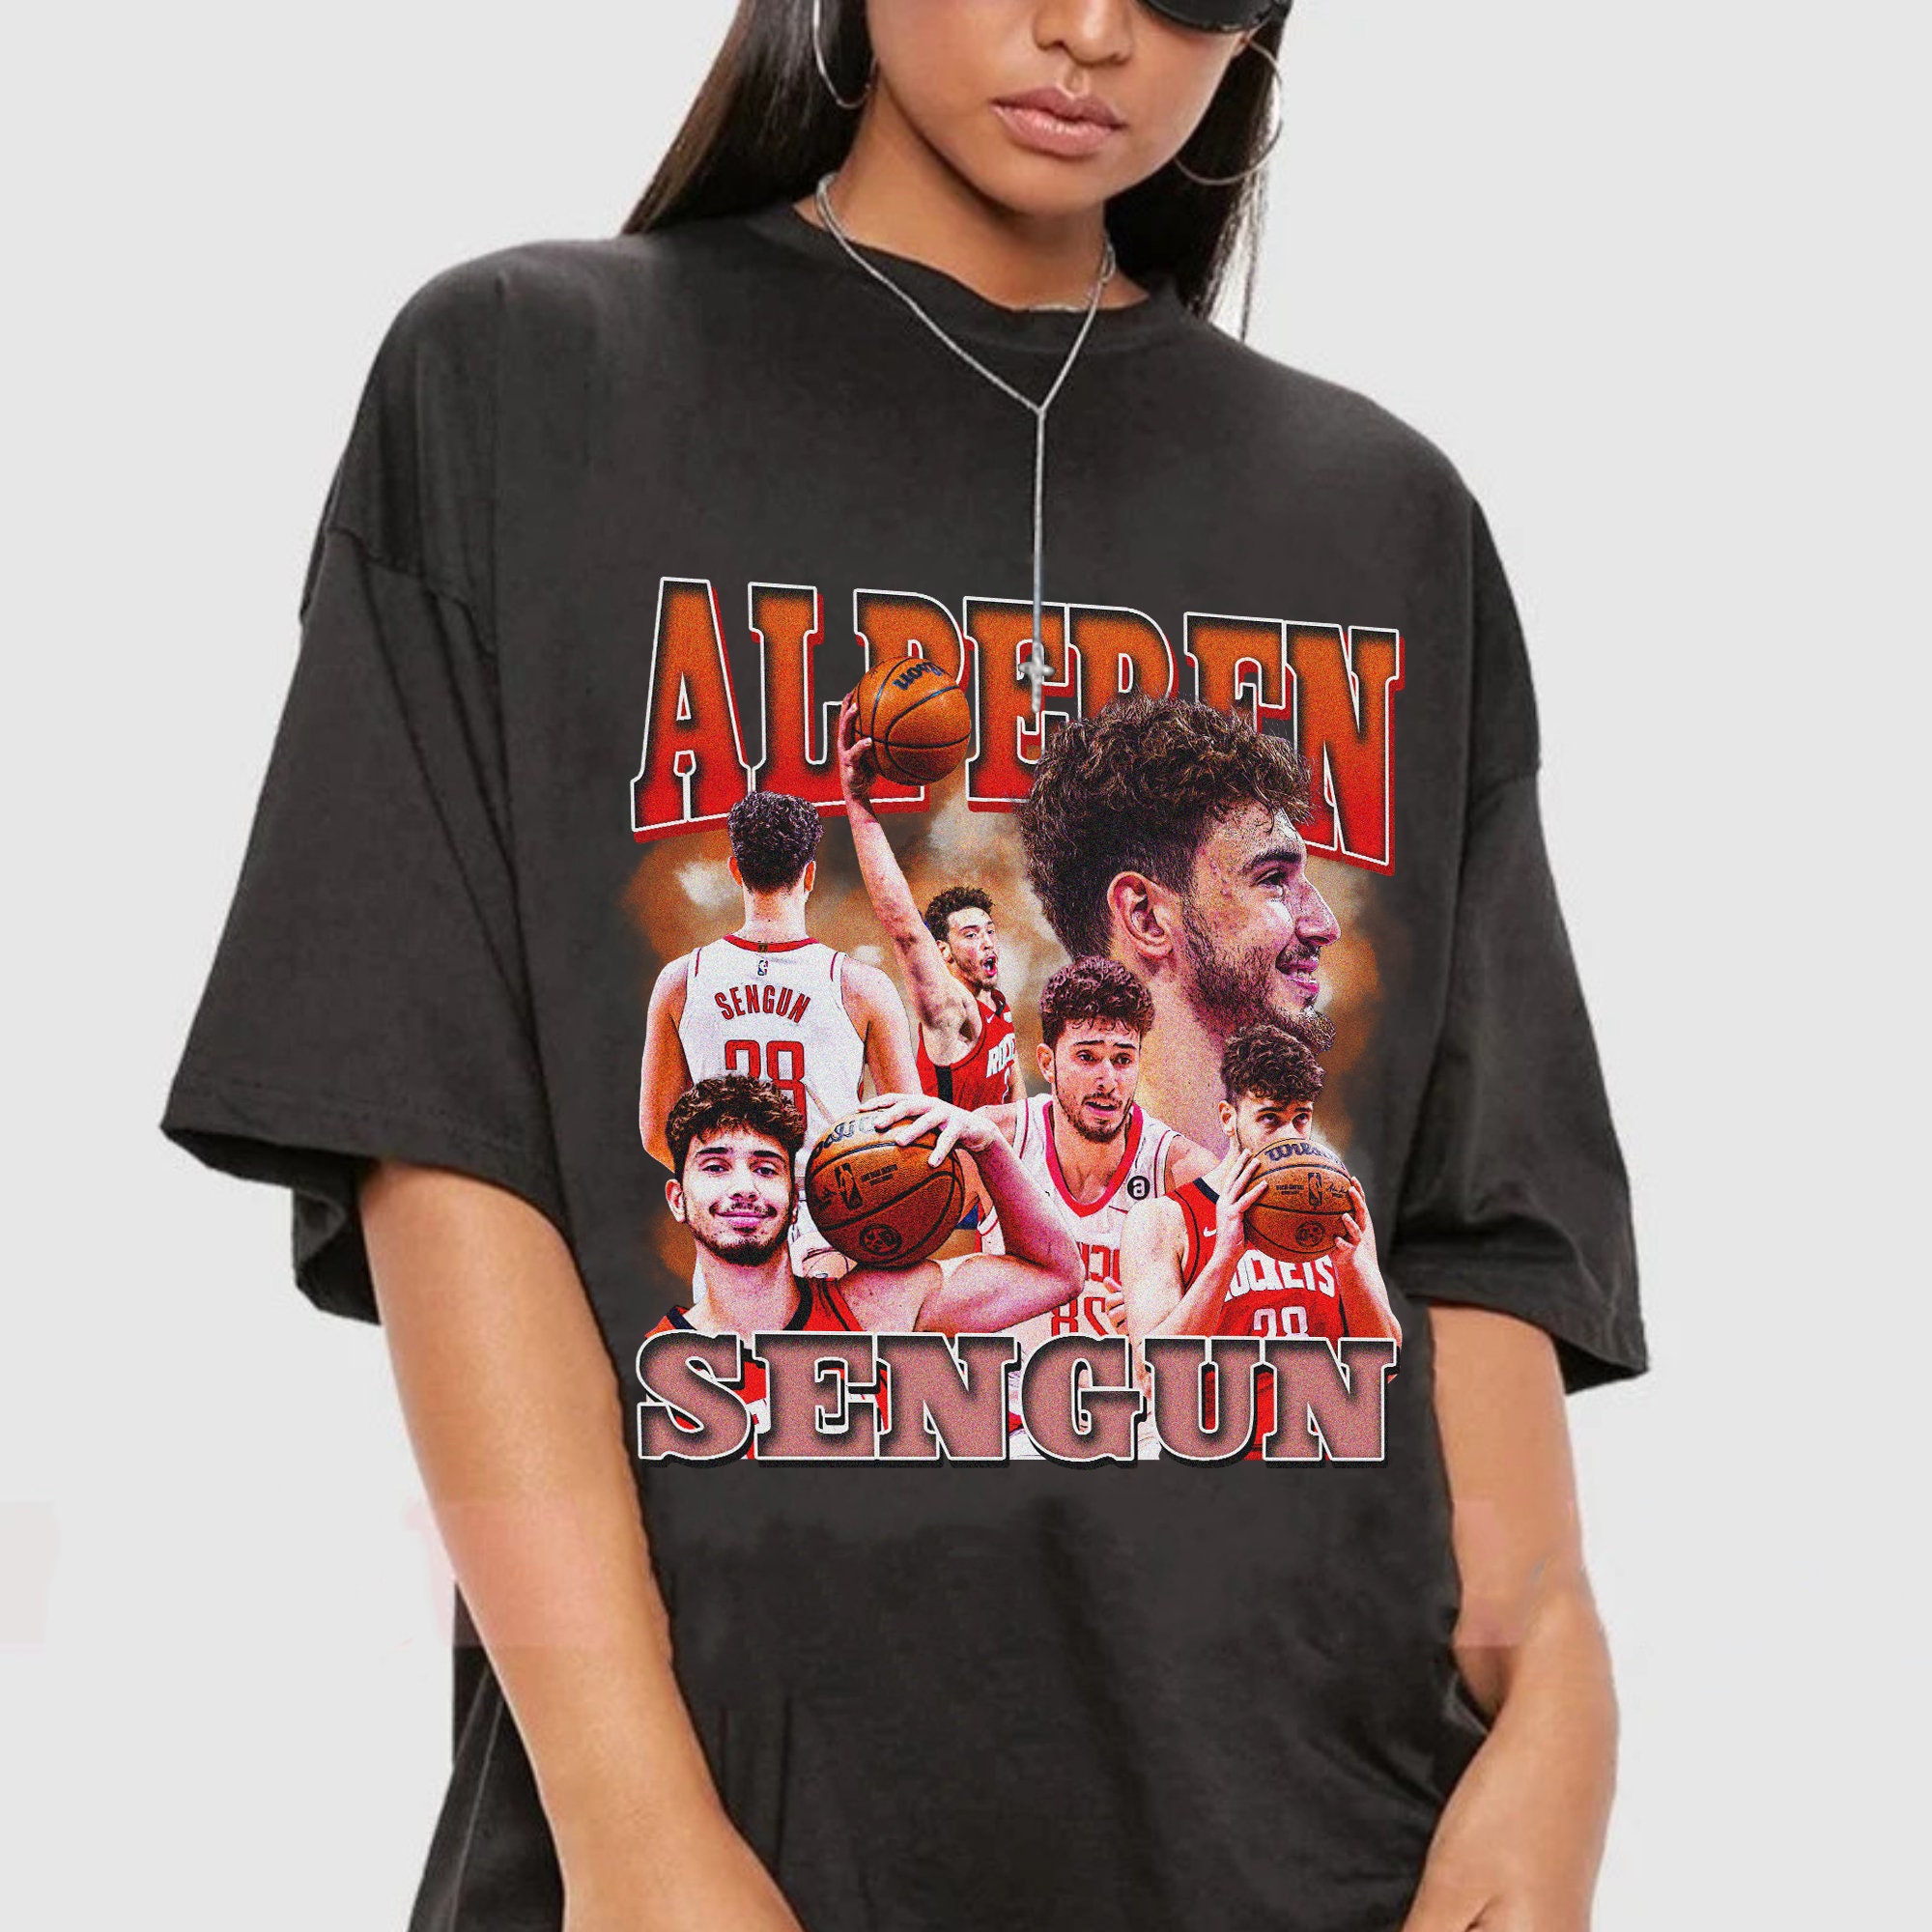 Alperen Sengun Jersey Essential T-Shirt for Sale by cocreations